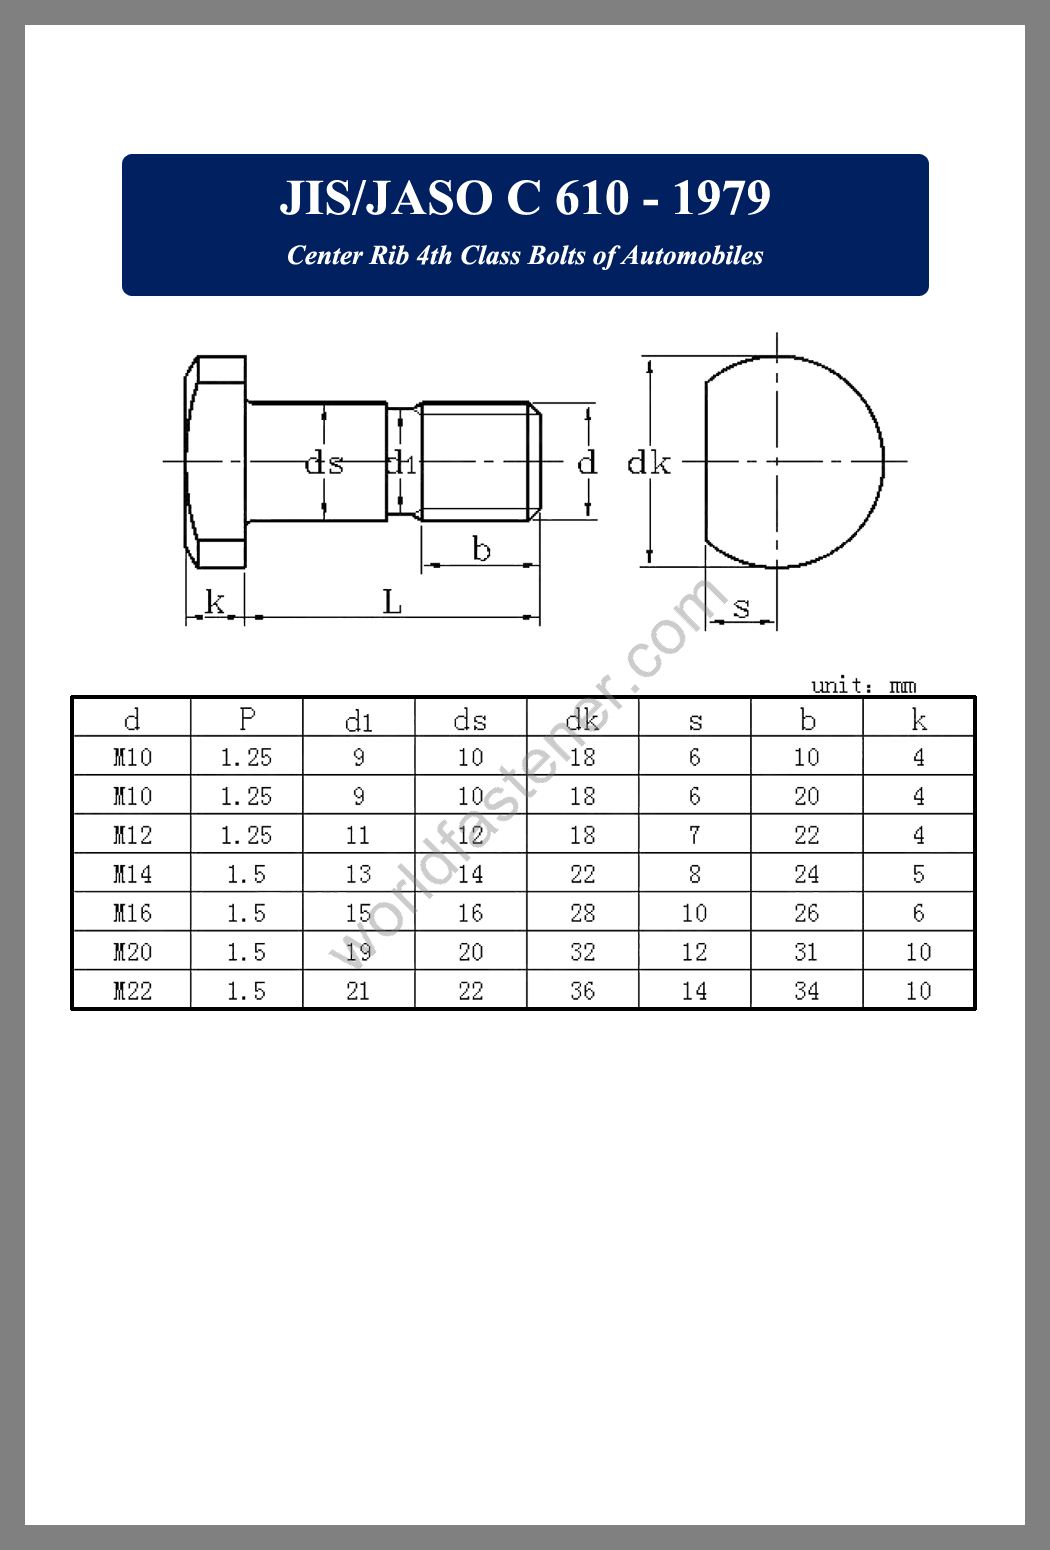 JIS -JASO C610, JIS -JASO C610 Center Rib, Wheel bolt, Wheel nut, fastener, screw, bolt